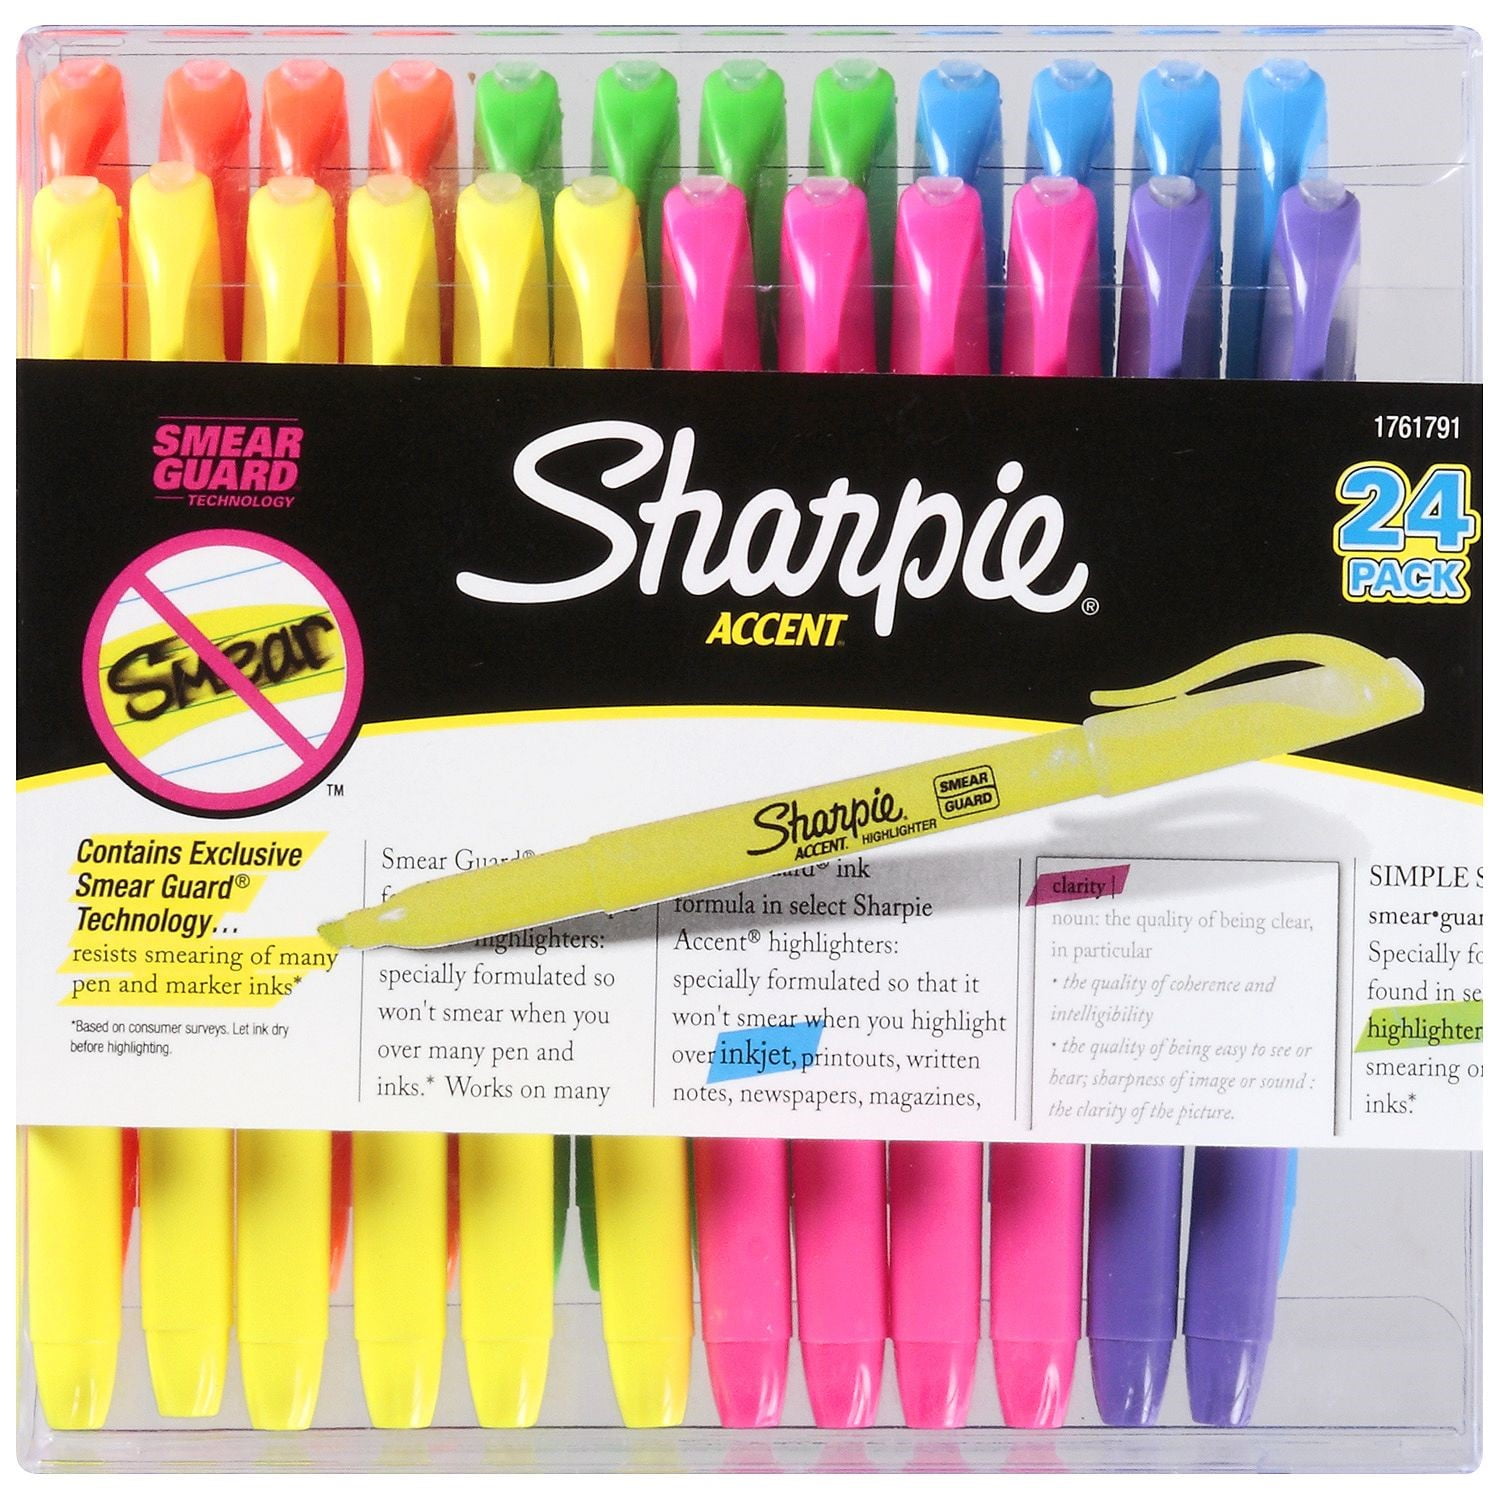 Brand Highlight: Sharpie® Brand